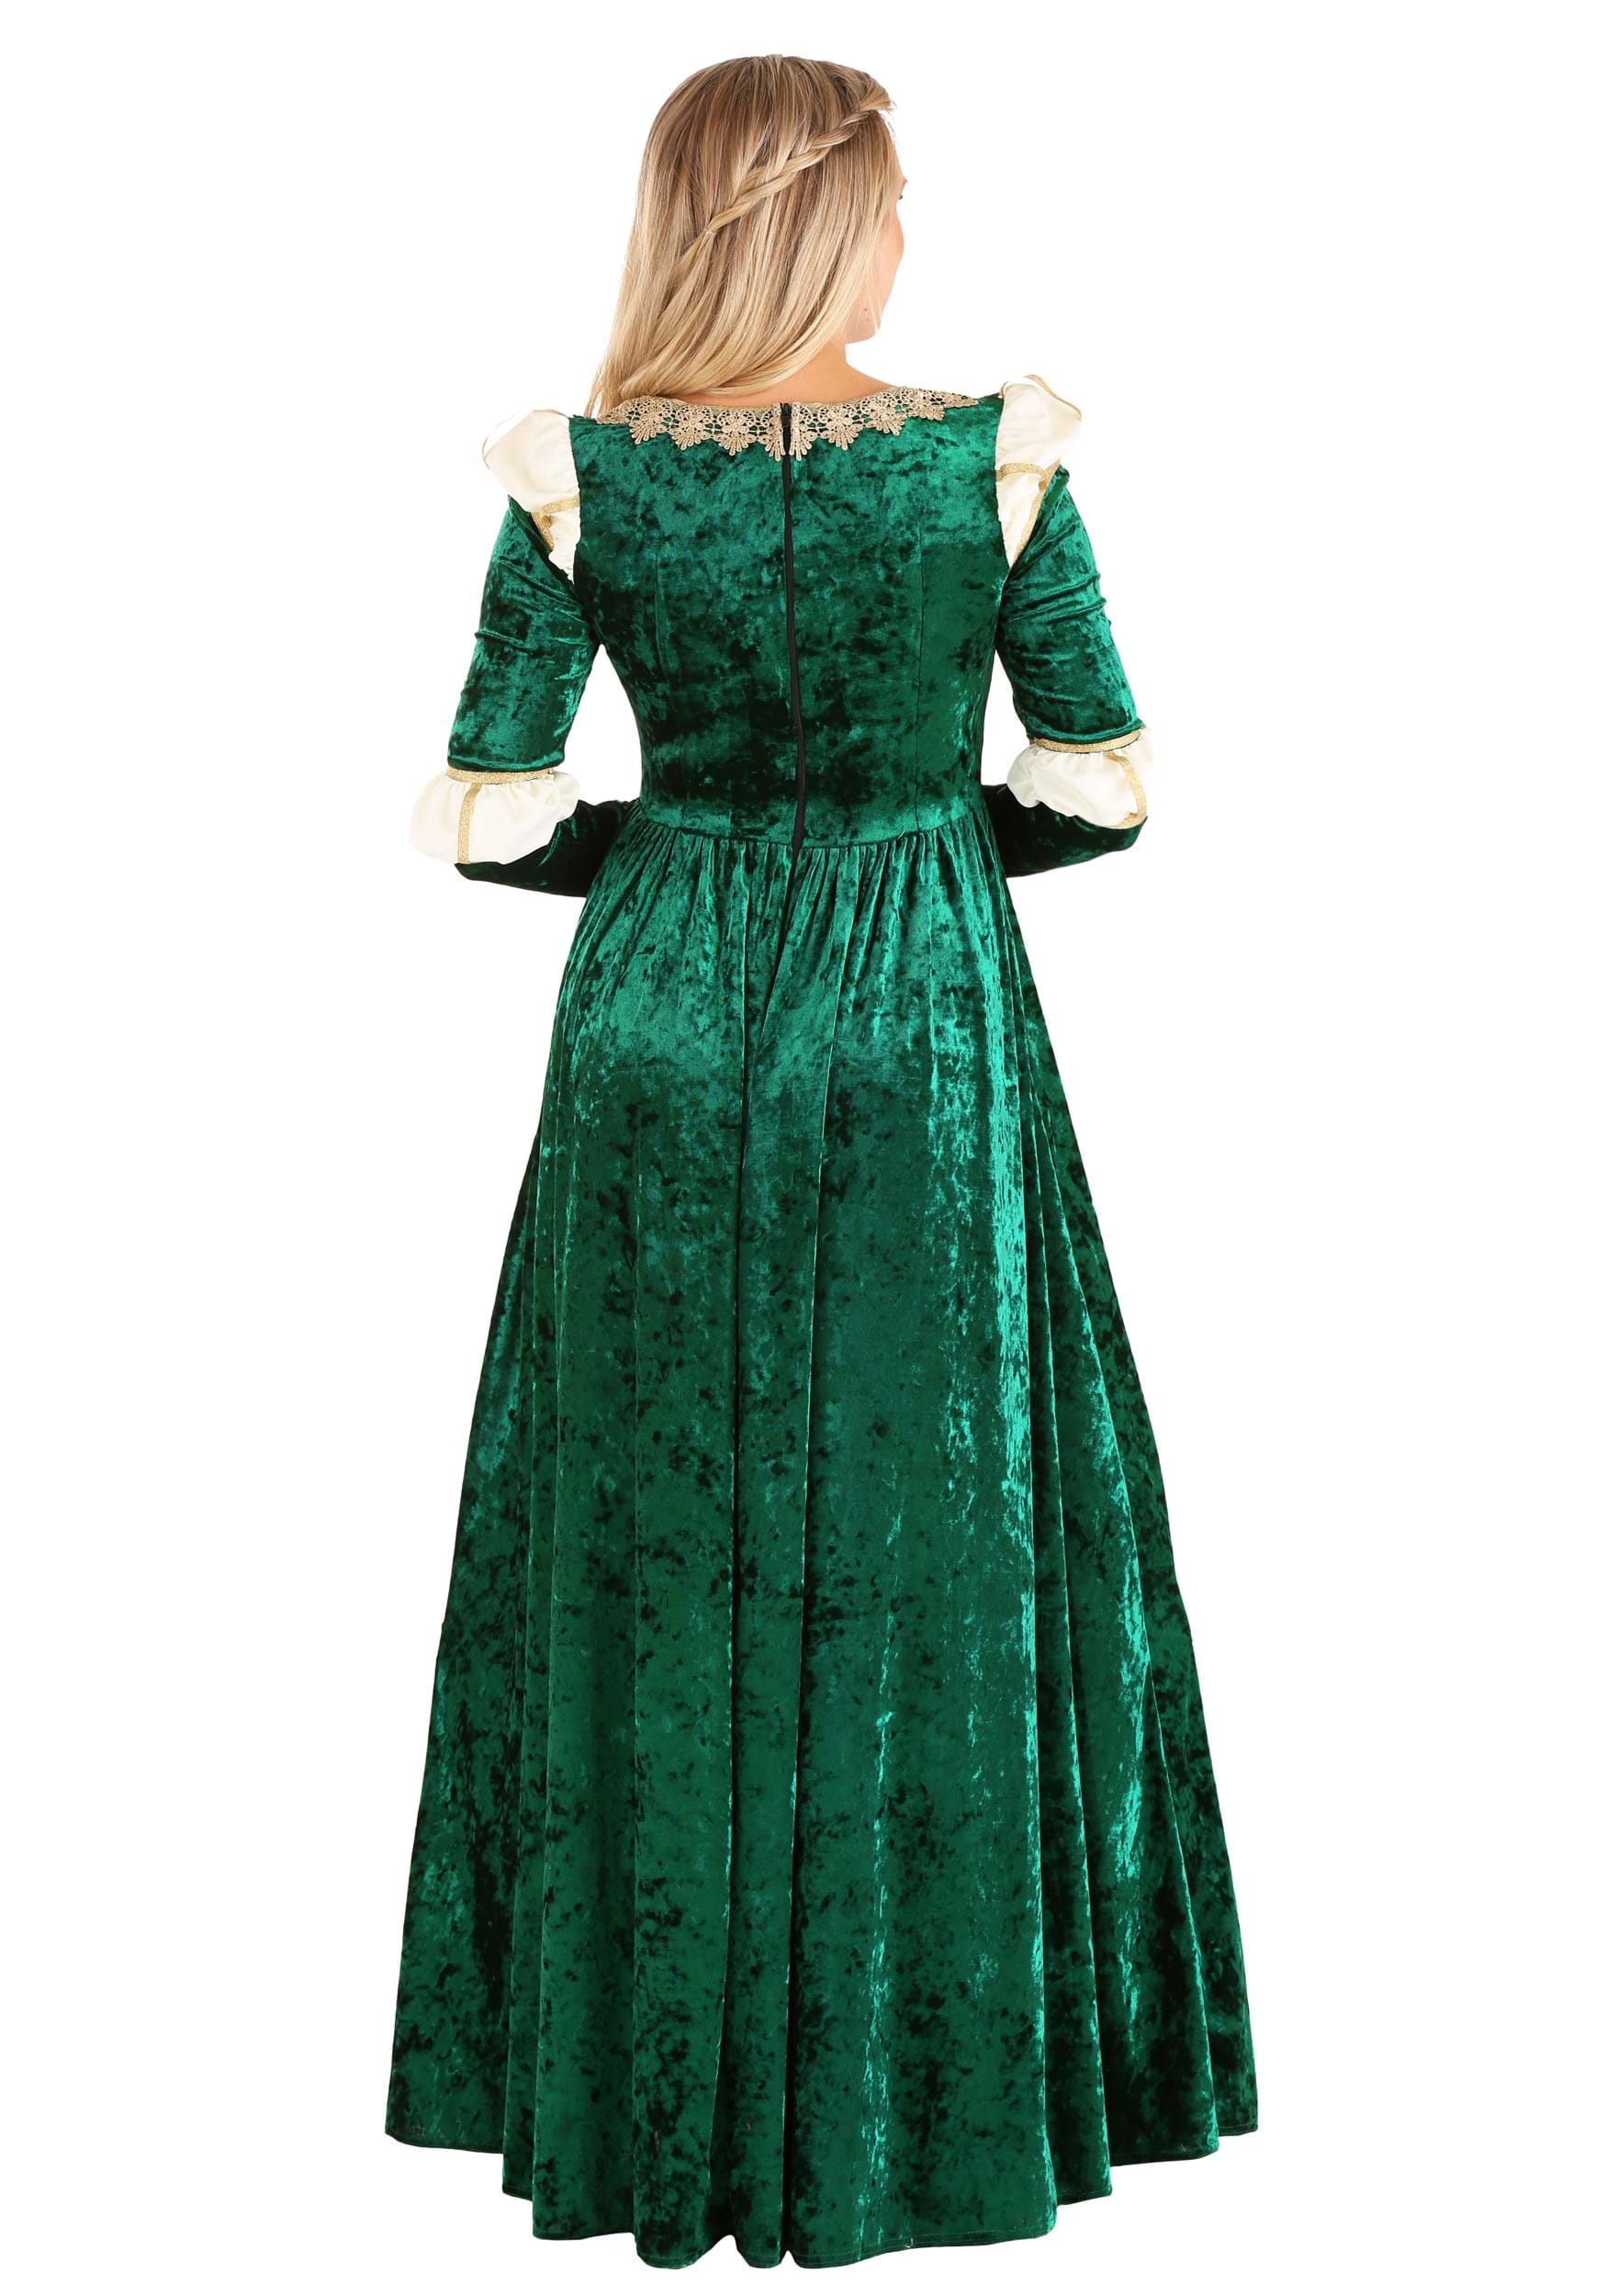 Women's Emerald Maiden Costume